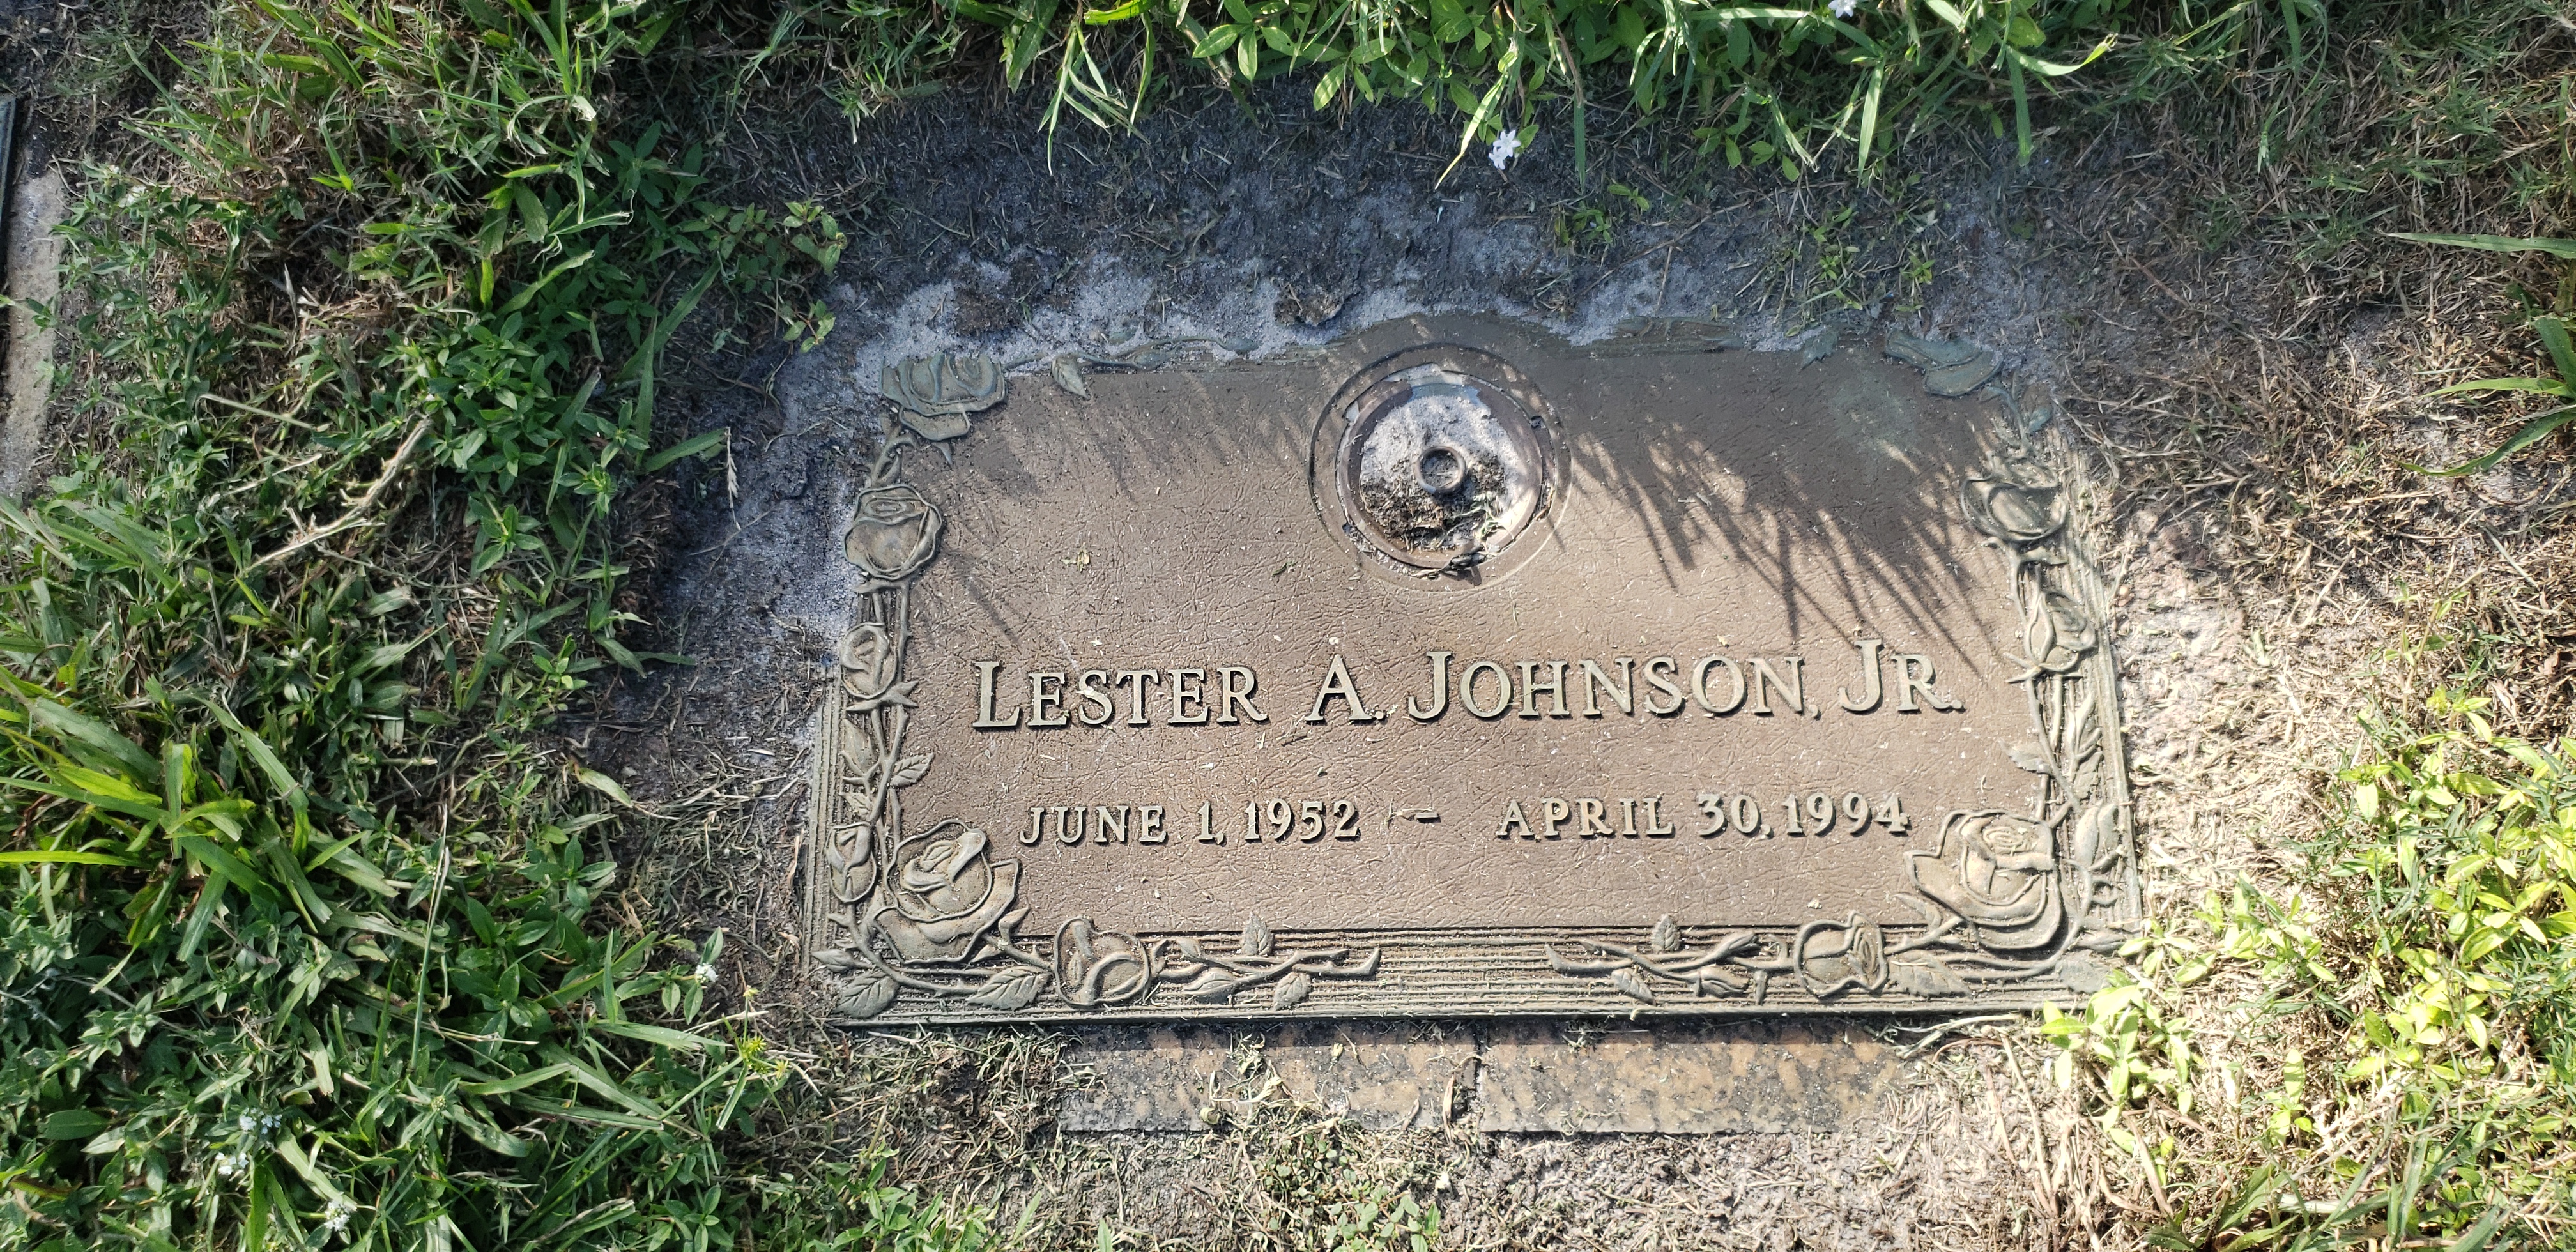 Lester A Johnson, Jr